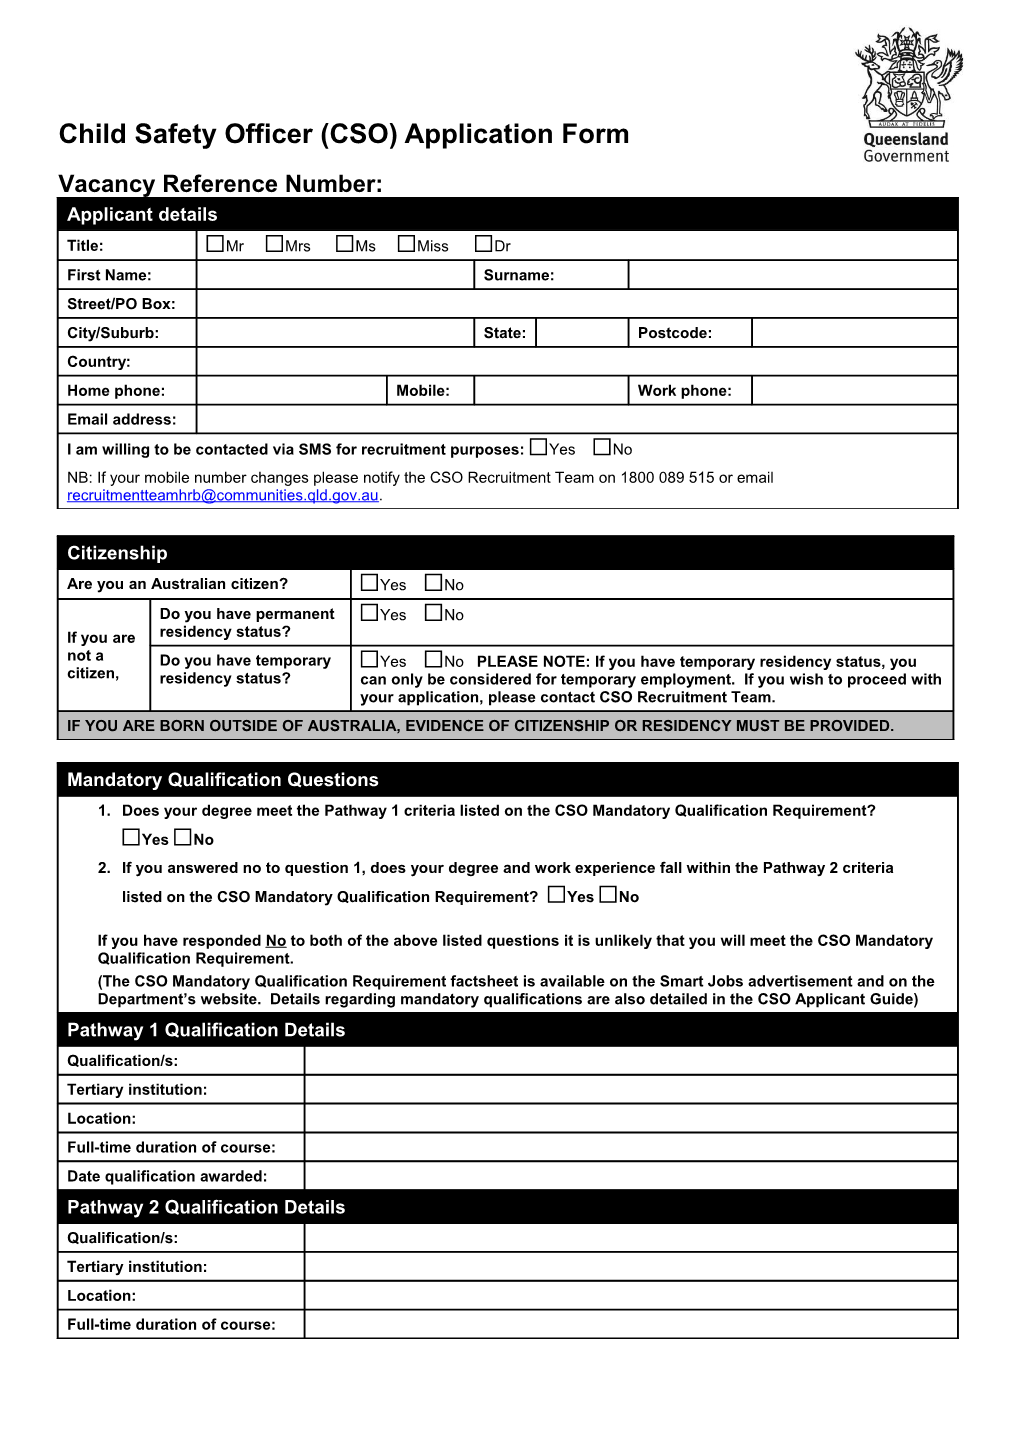 CSO Application Form